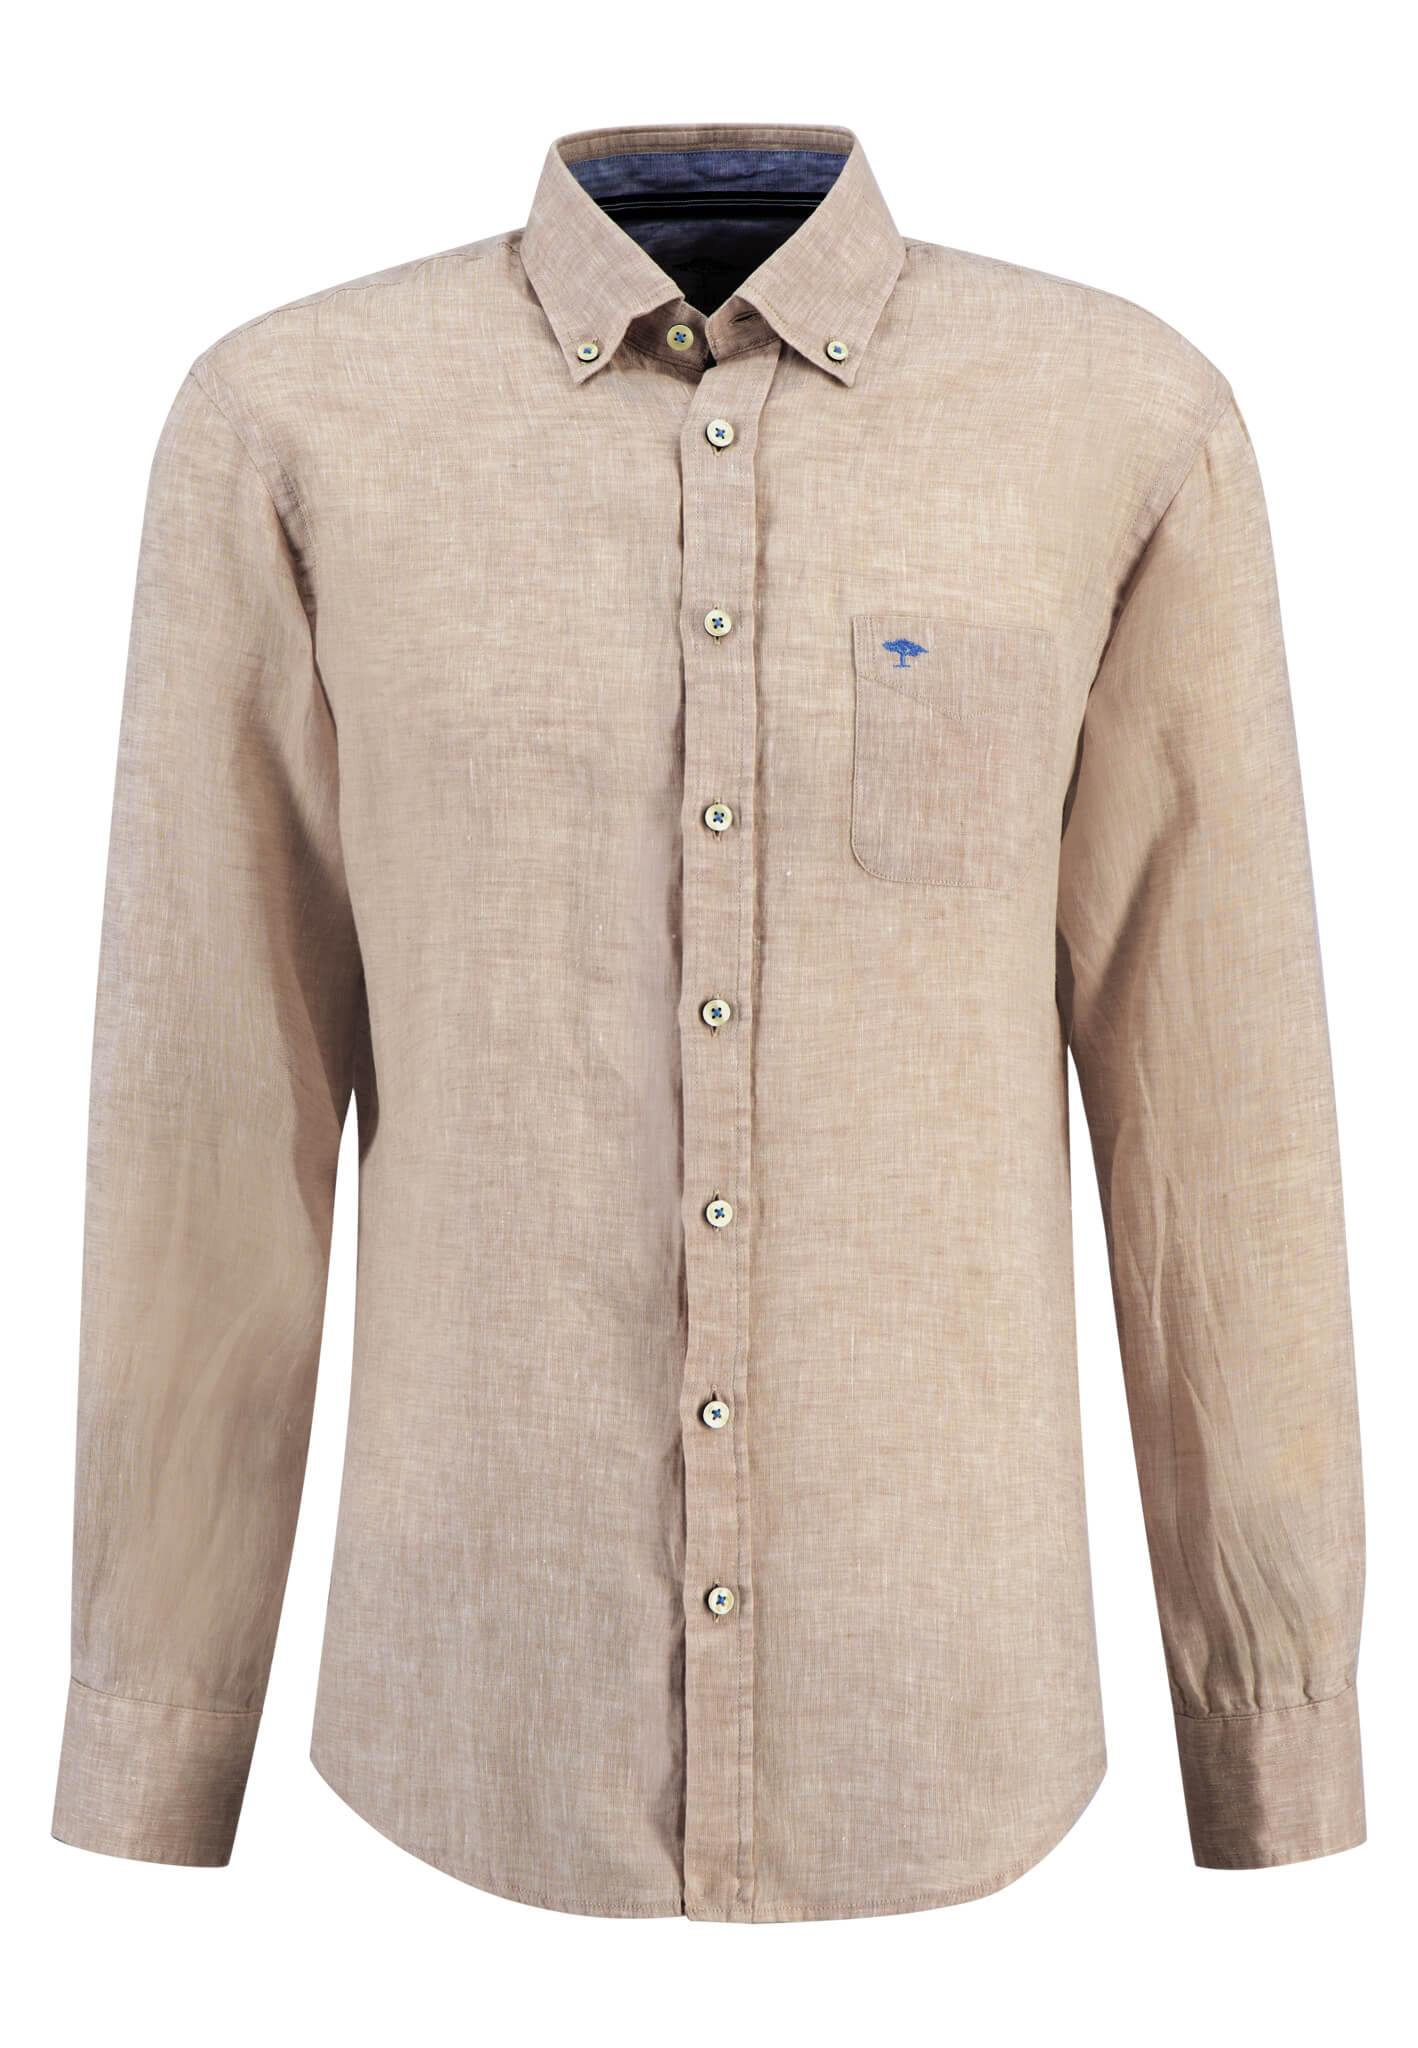 of Shirts Linen Hatton Haslemere Davids Fynch Pure -